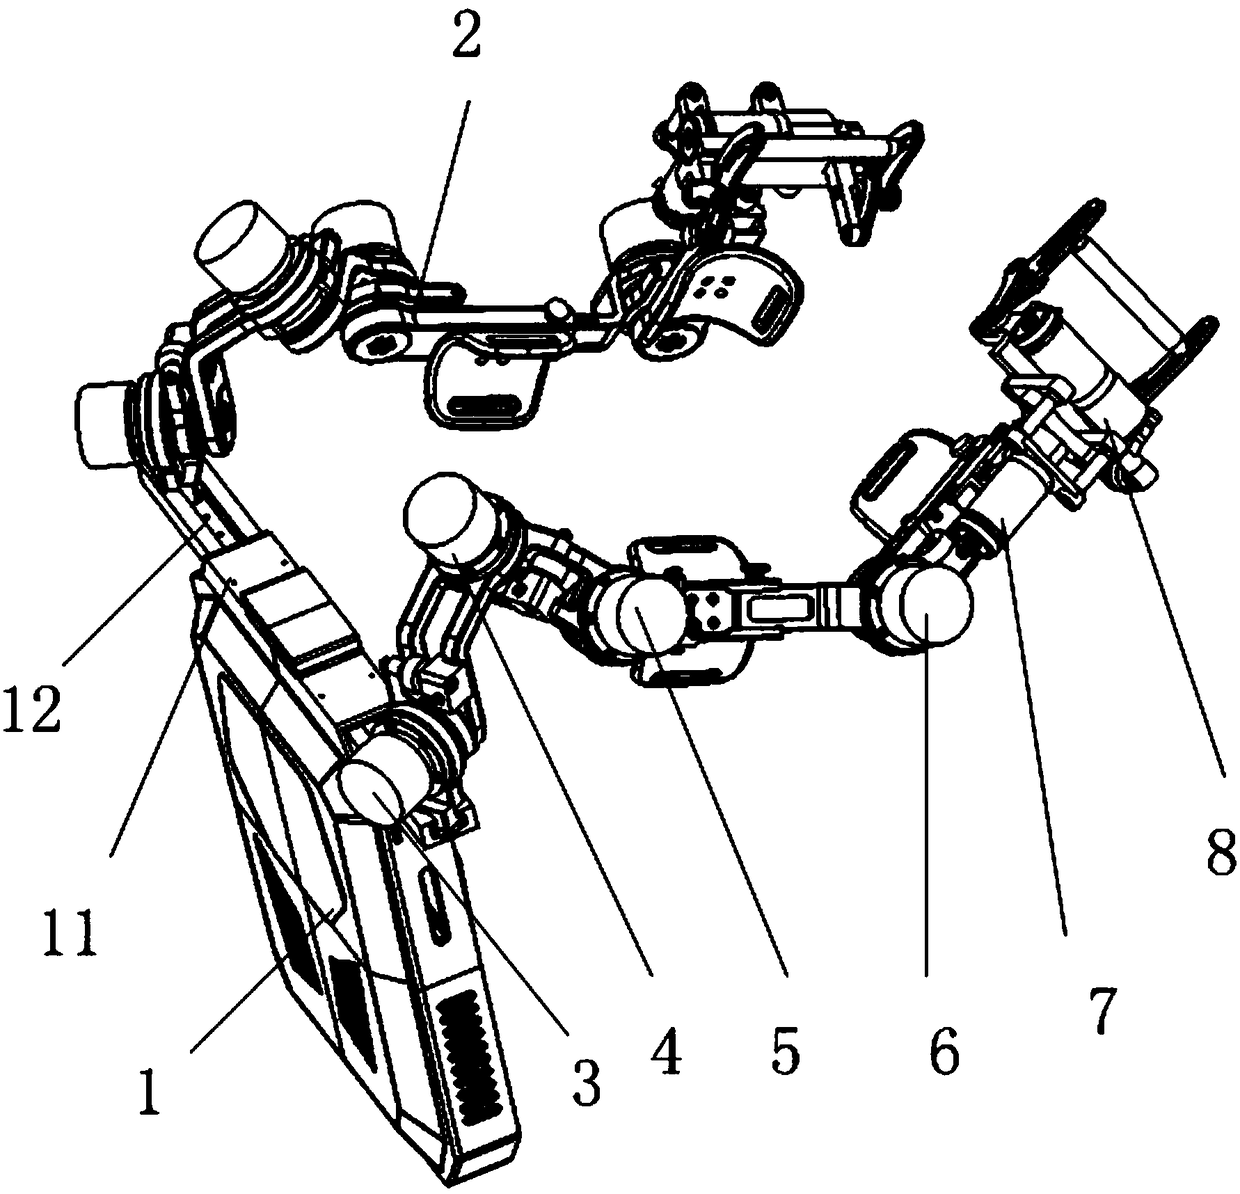 Rehabilitation mechanical arm and rehabilitation robot